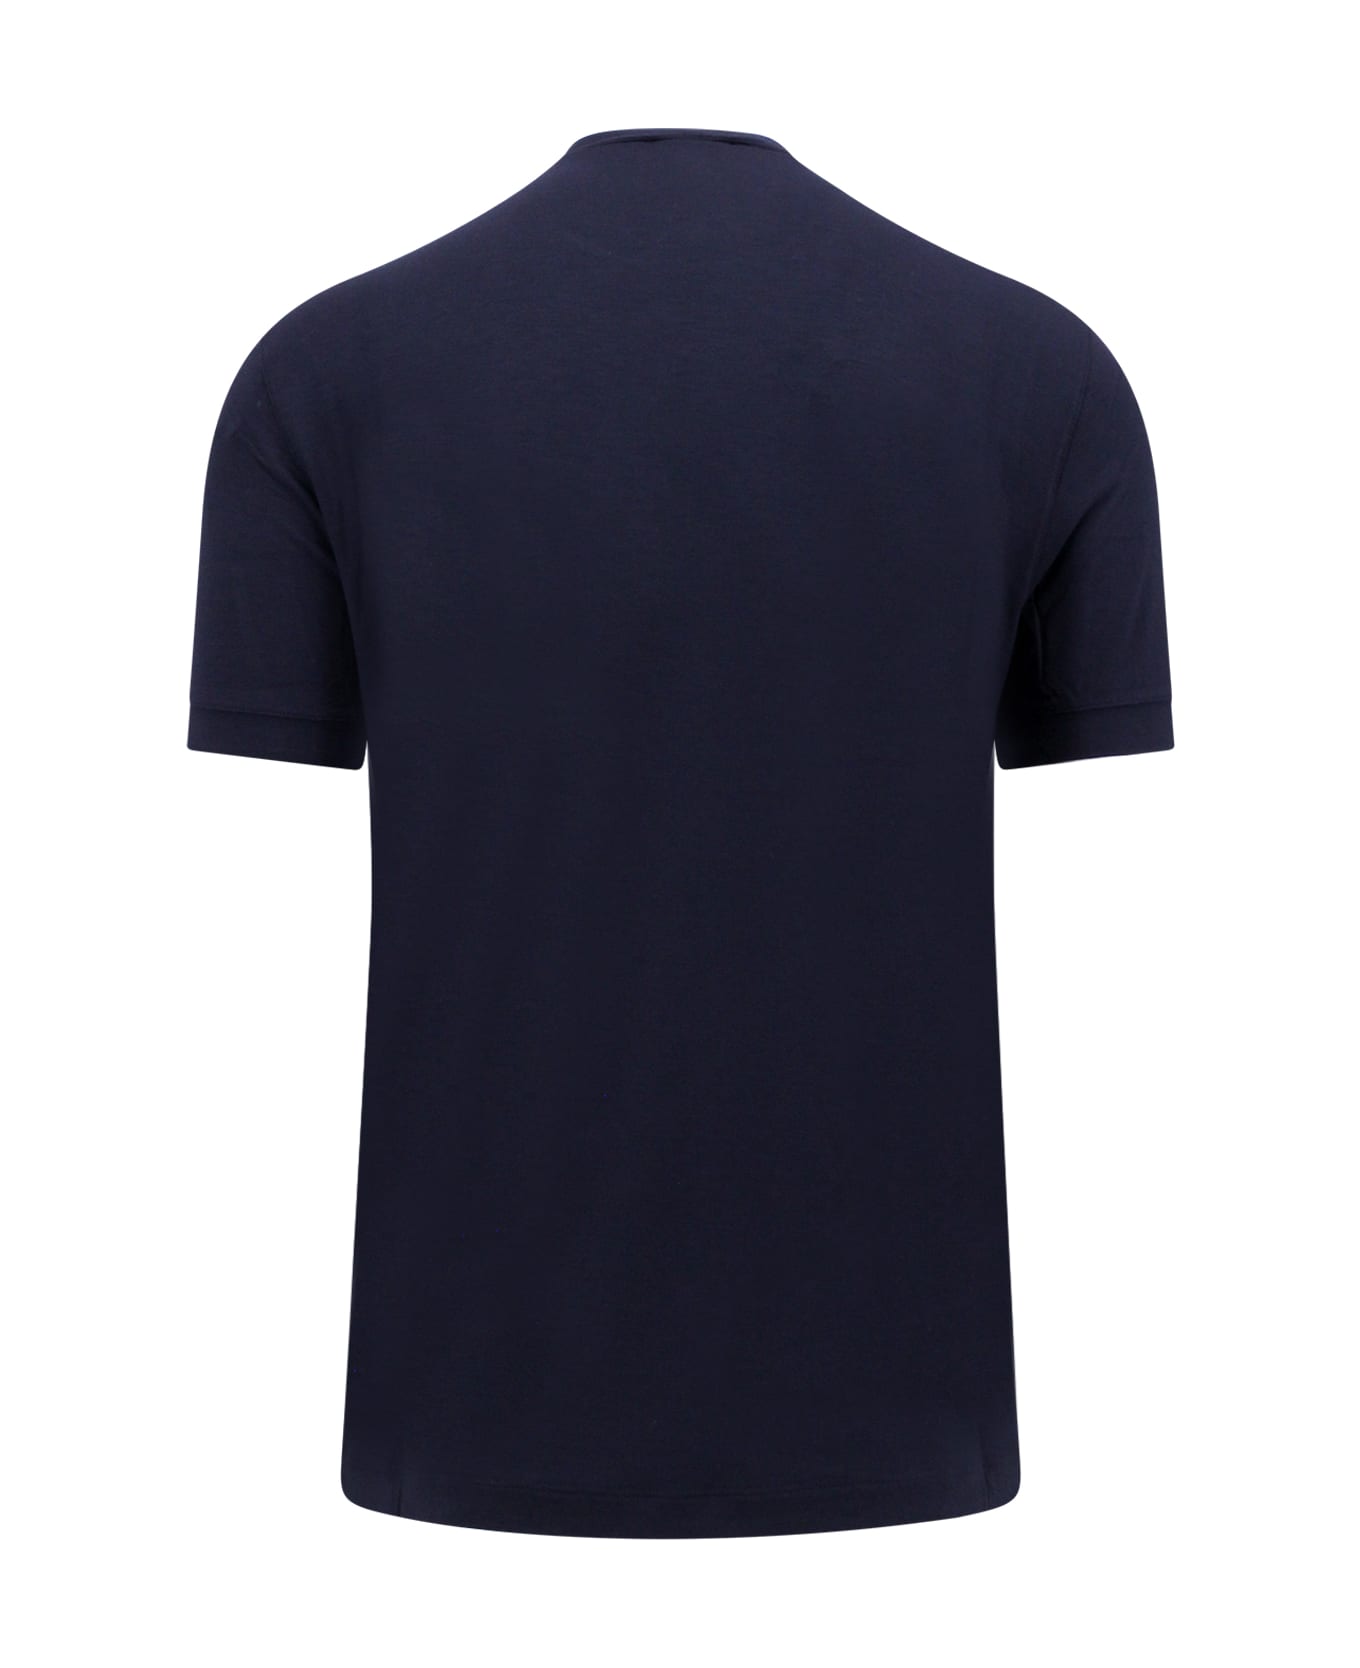 Giorgio Armani T-shirt - Blu